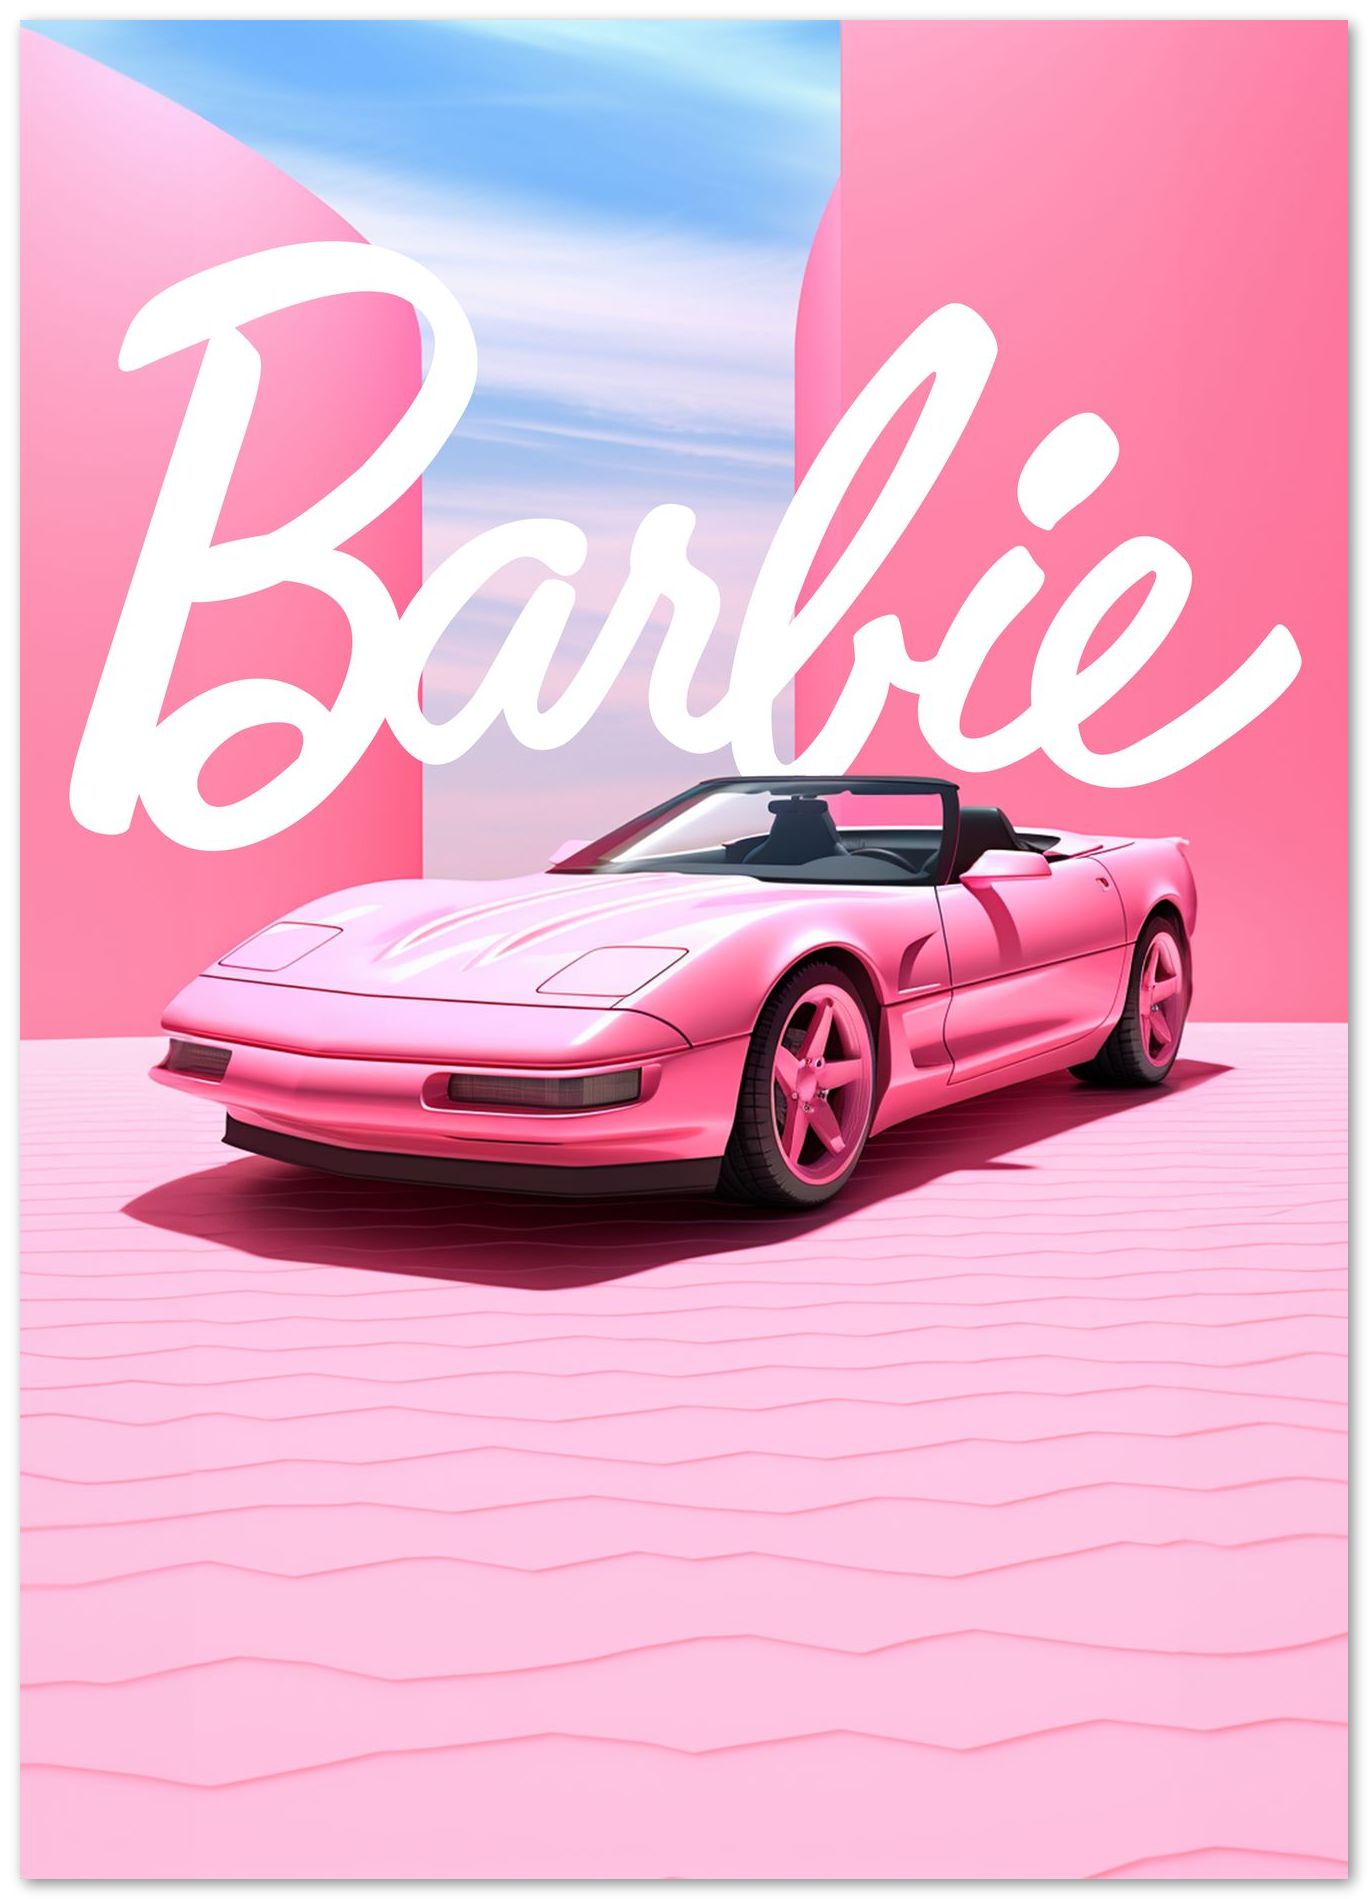 Barbie Convertible - @donluisjimenez